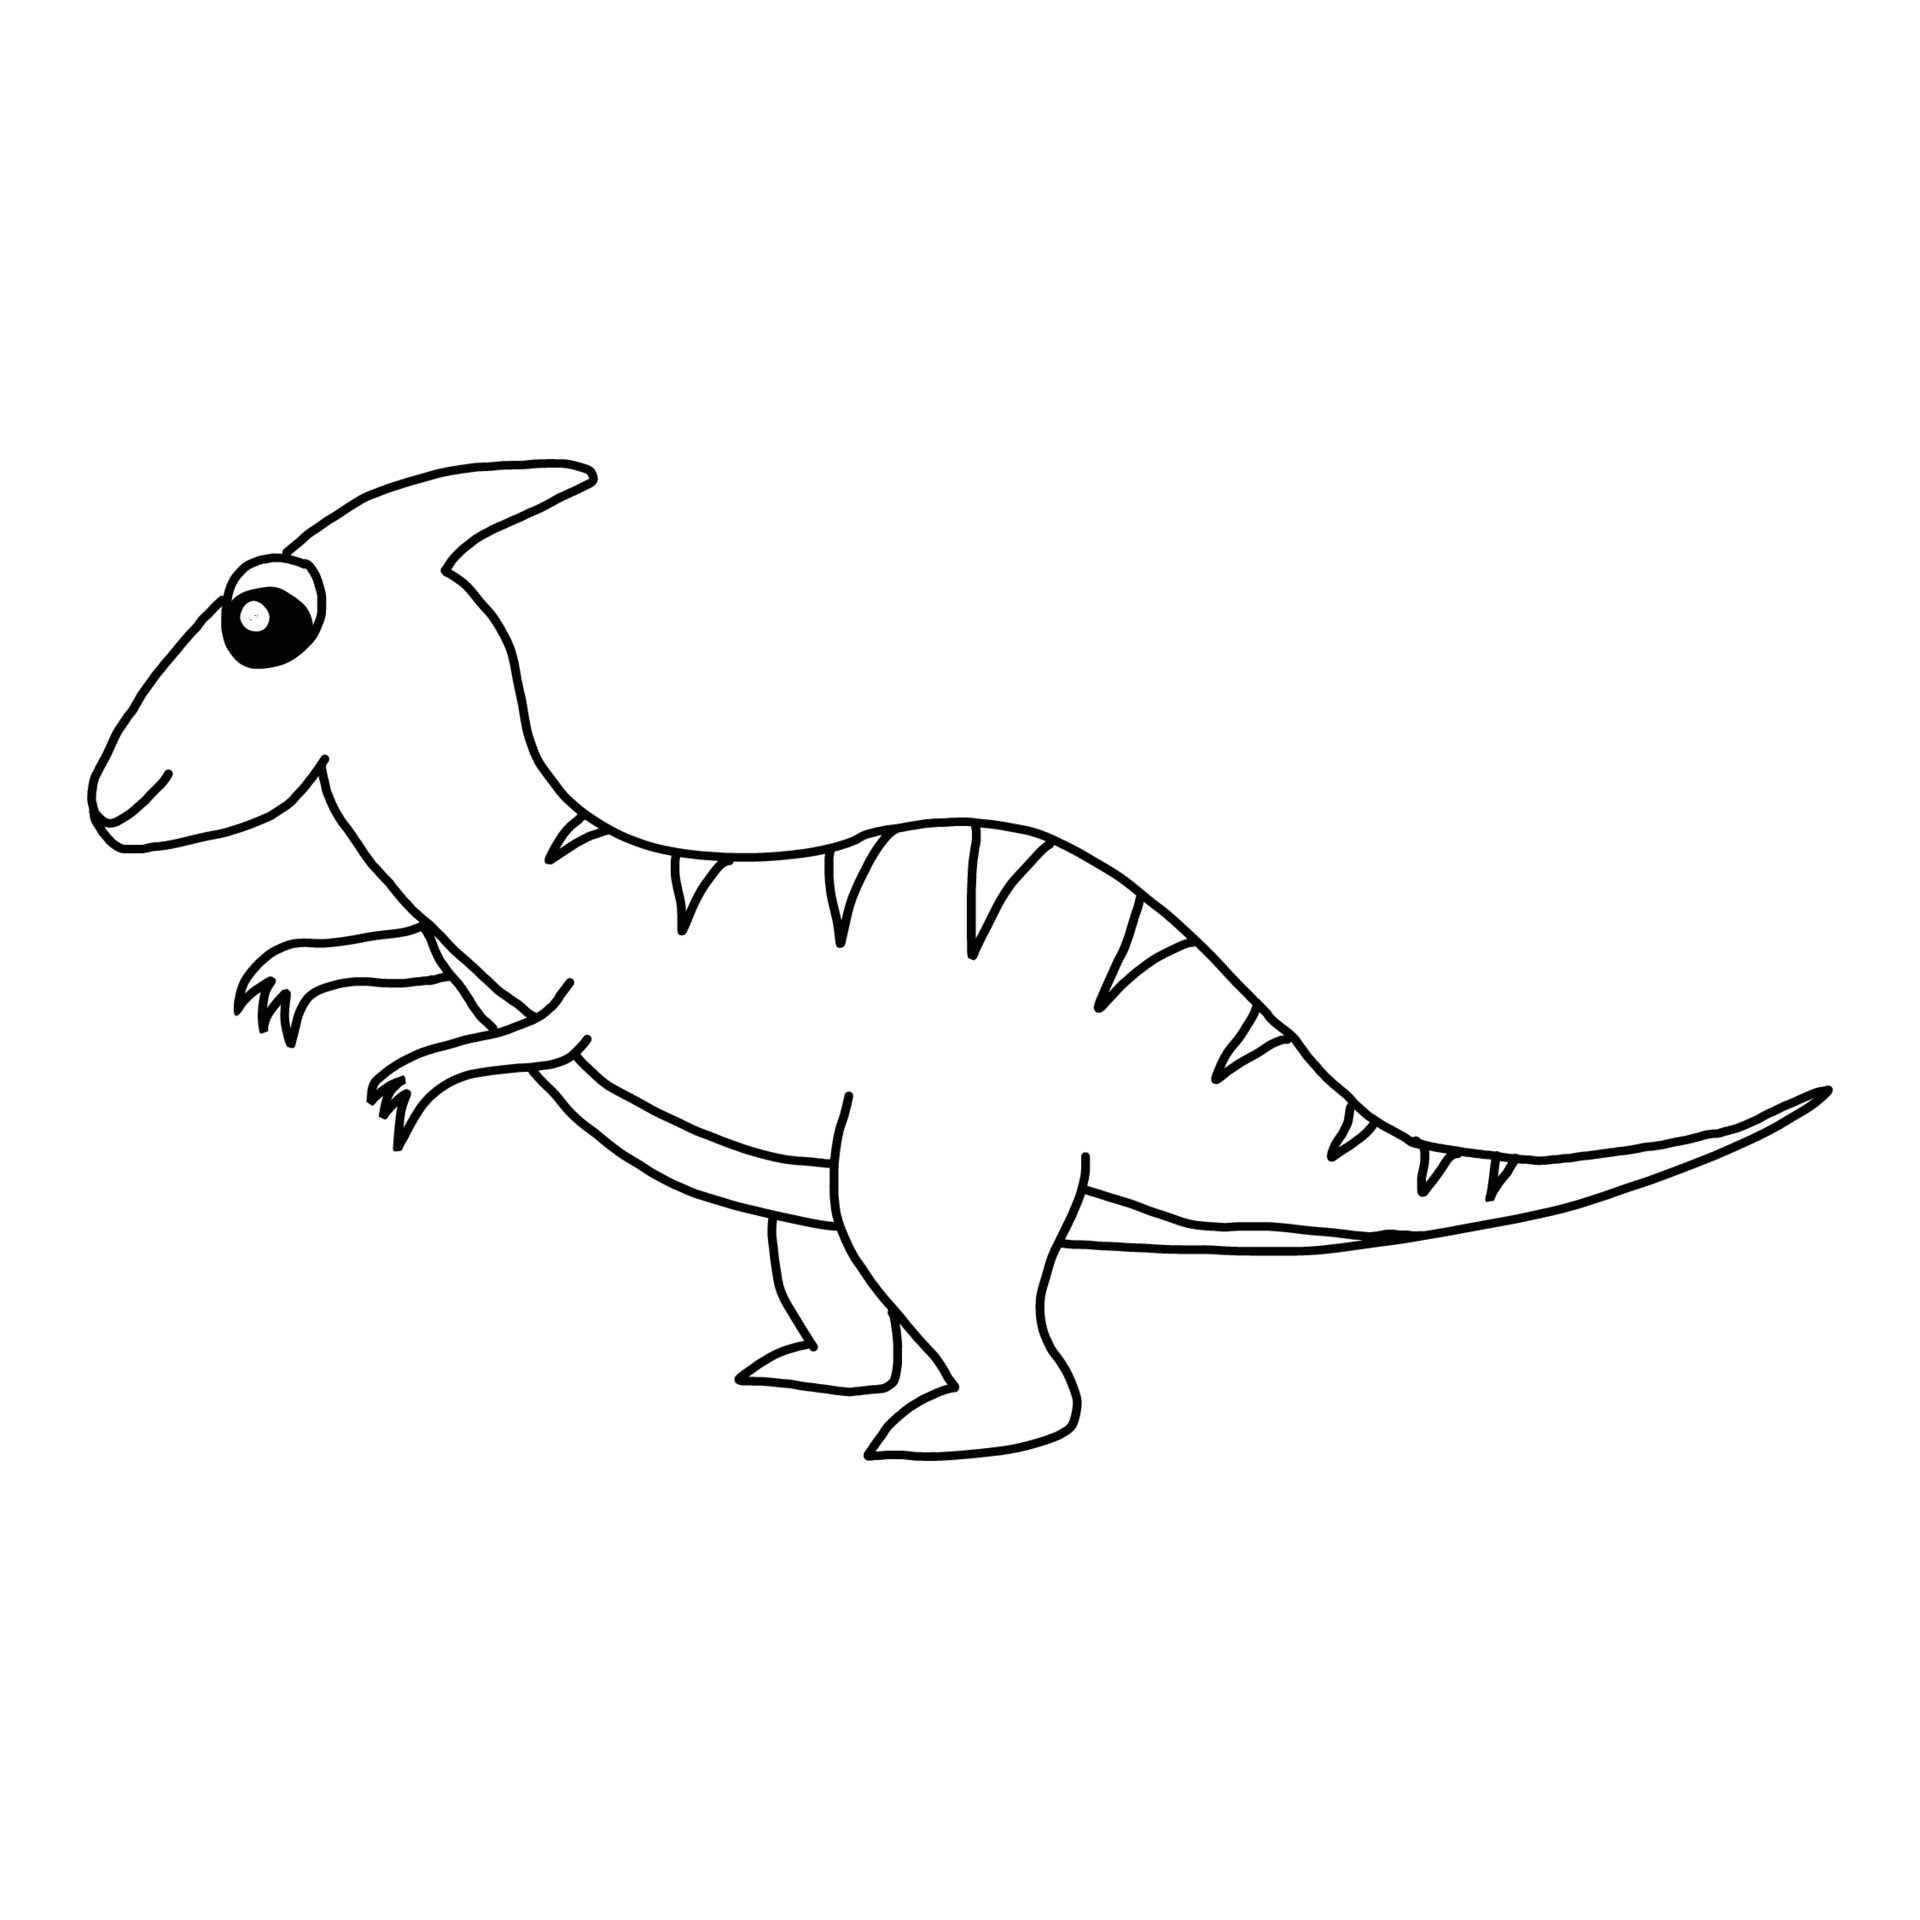 Easy Dinosaur Drawing for Kids: Step-by-Step Tutorial for Beginners #D... |  TikTok